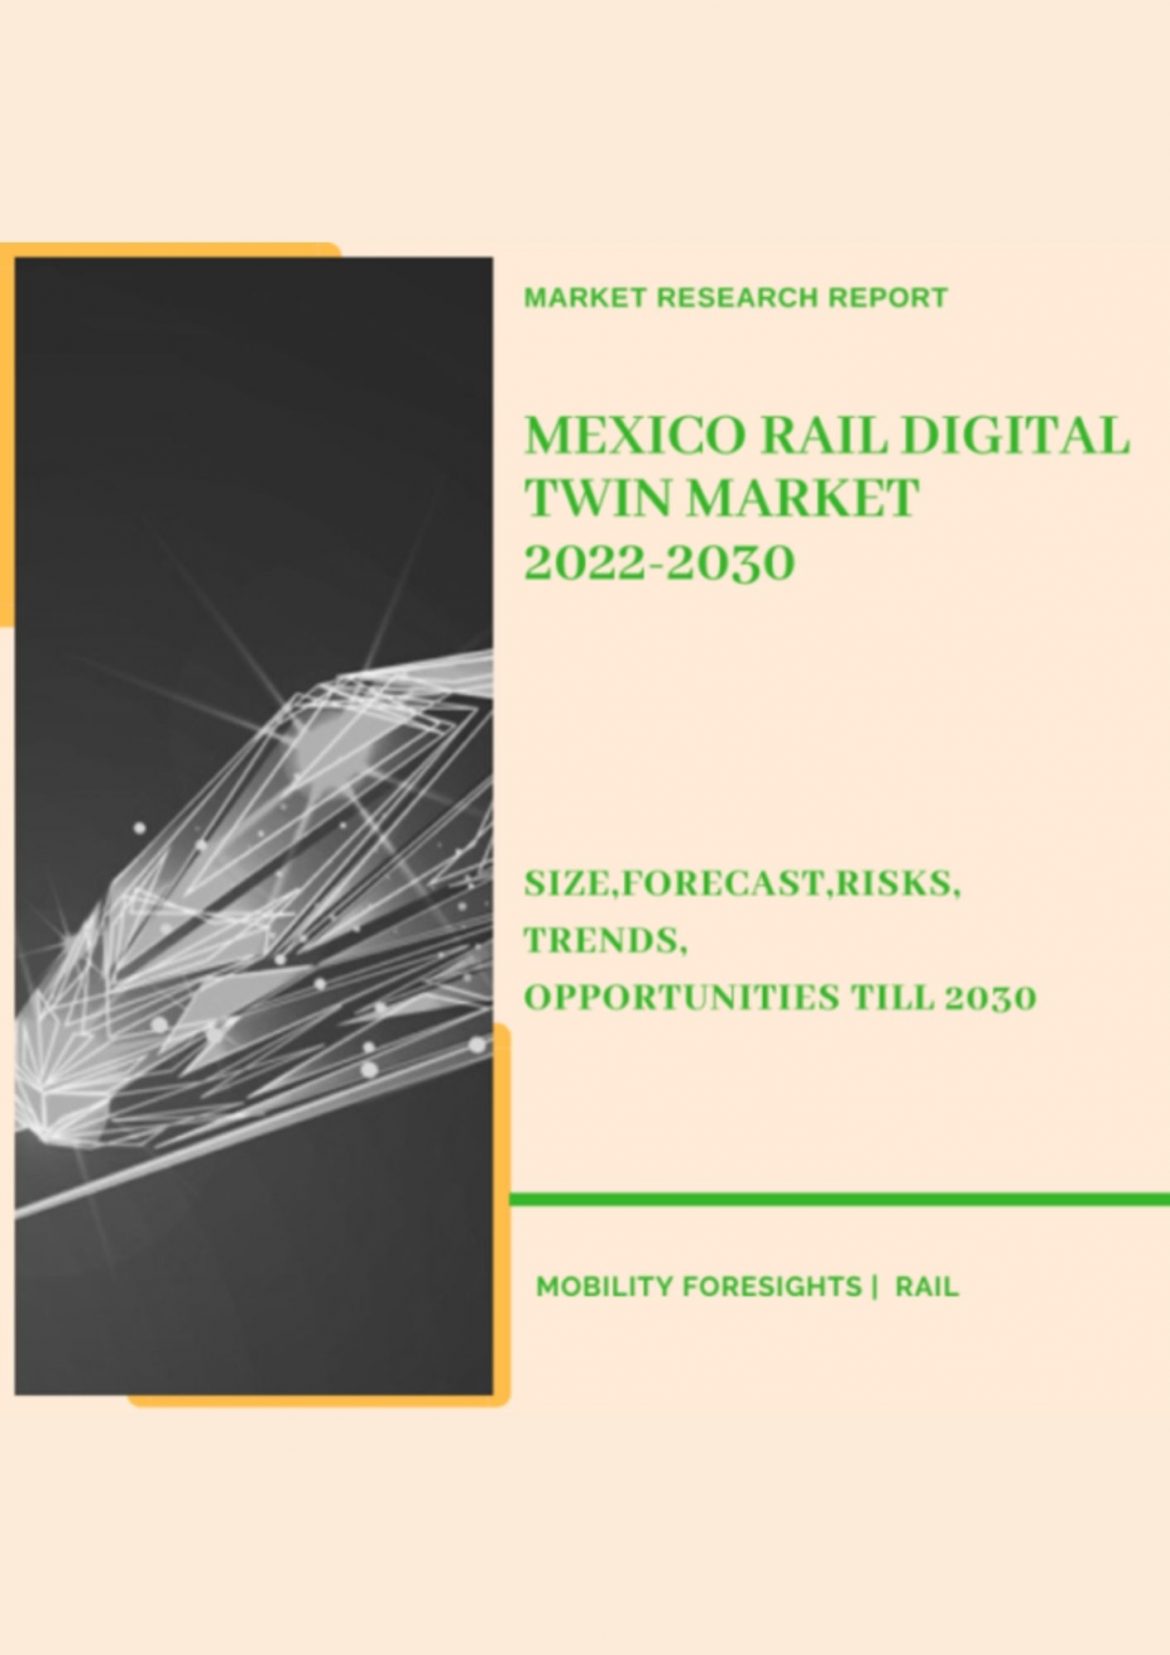 Mexico Rail Digital Twin Market 2022-2030